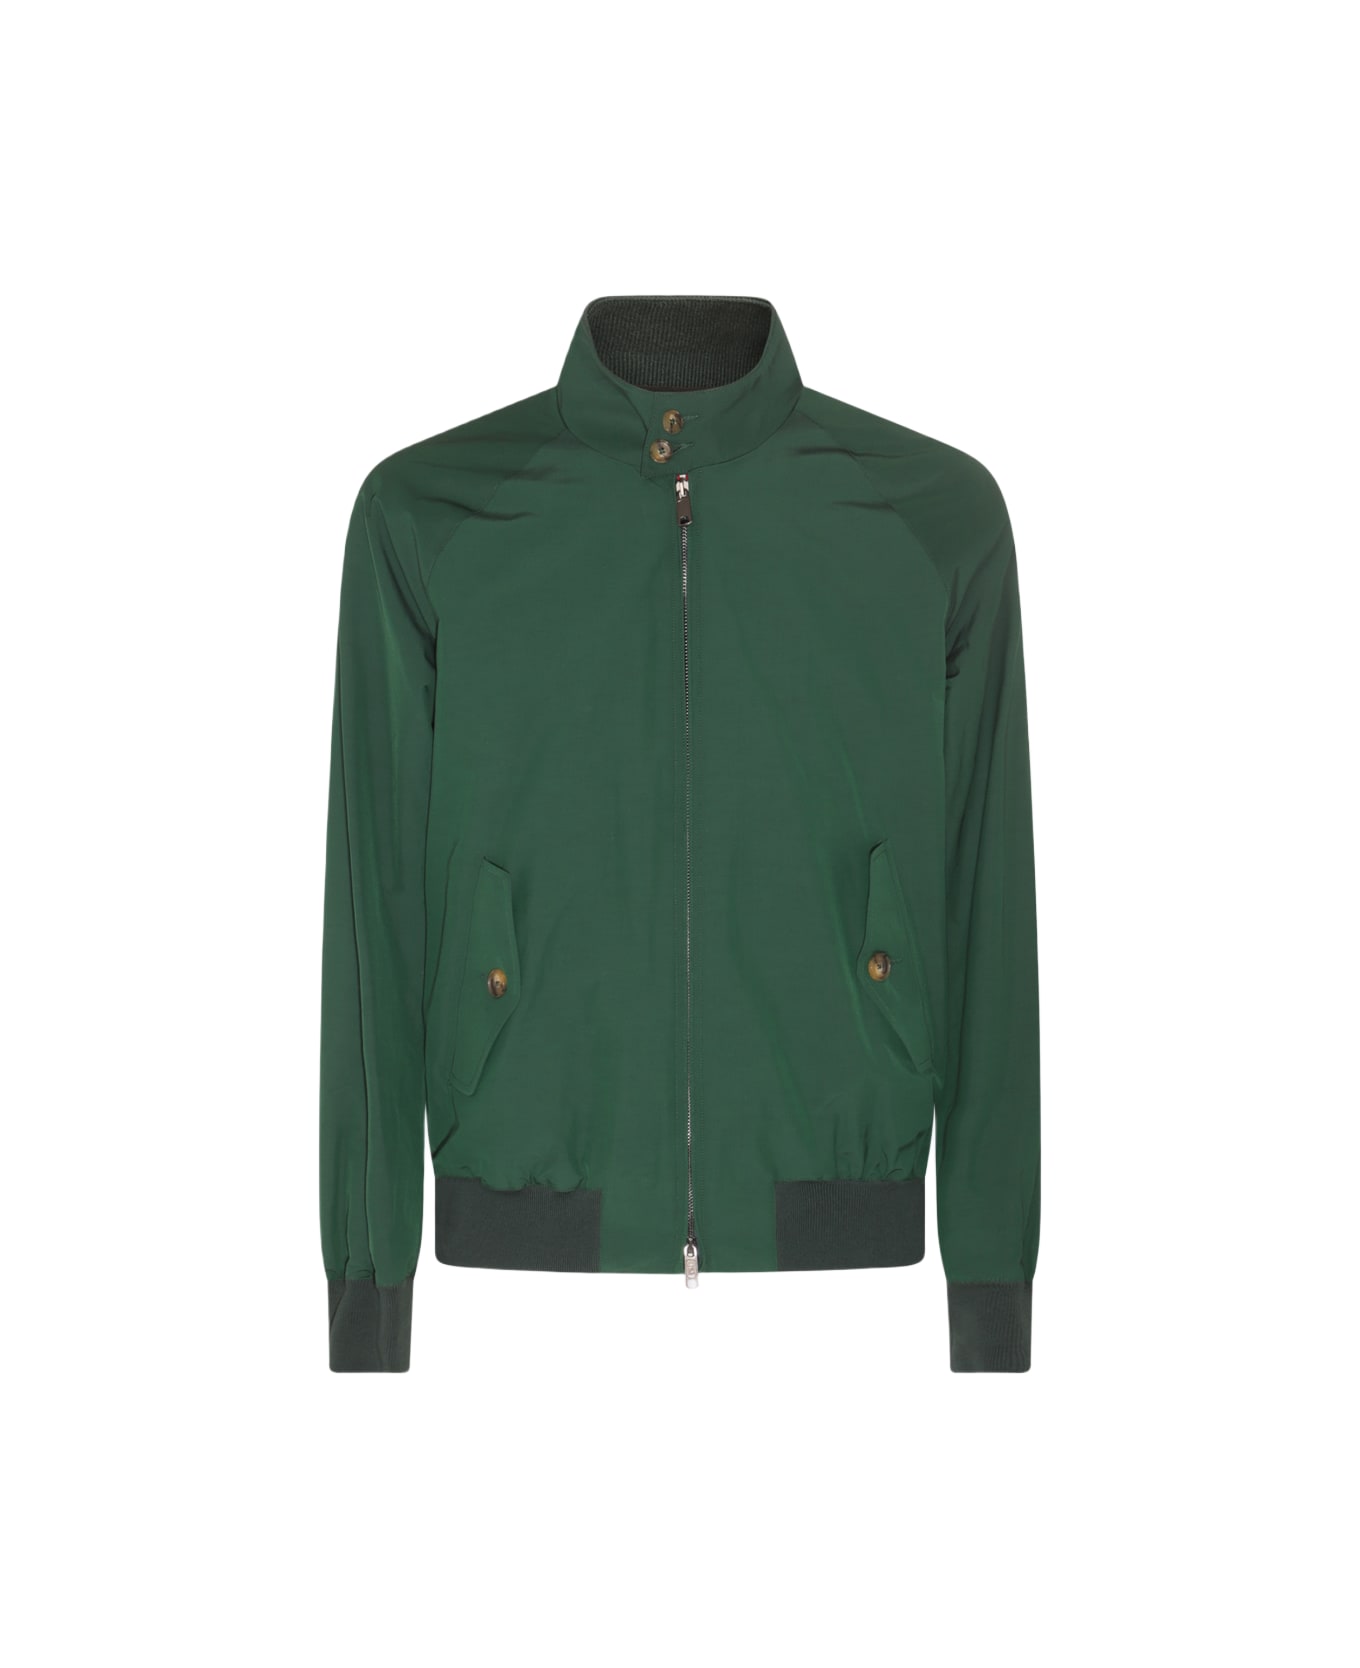 Baracuta Green Cotton Blend Casual Jacket - Racing green